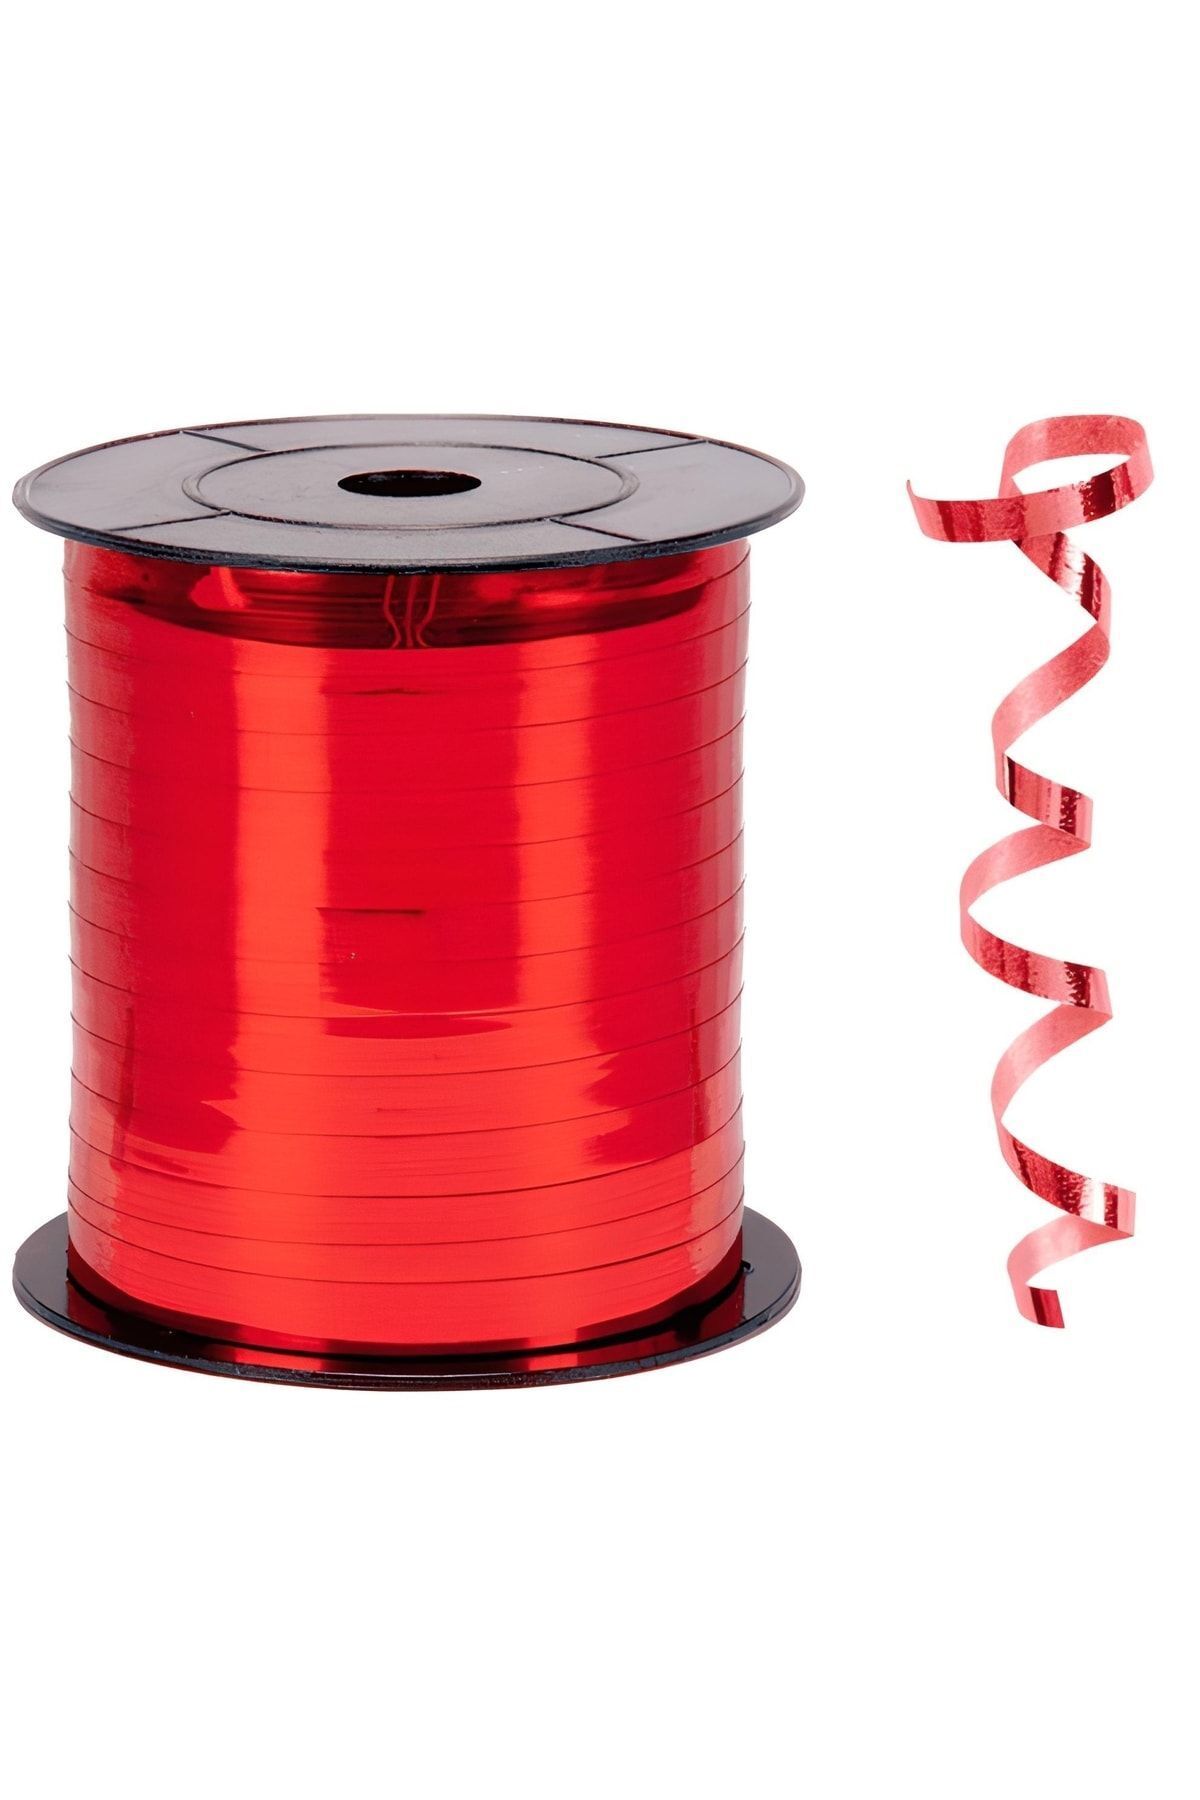 HKNYS Metalik Kırmızı Renk Rafya 8 Mm X 200 M -ekstra Metalik -balon Ipi-balon Baglama Ipi